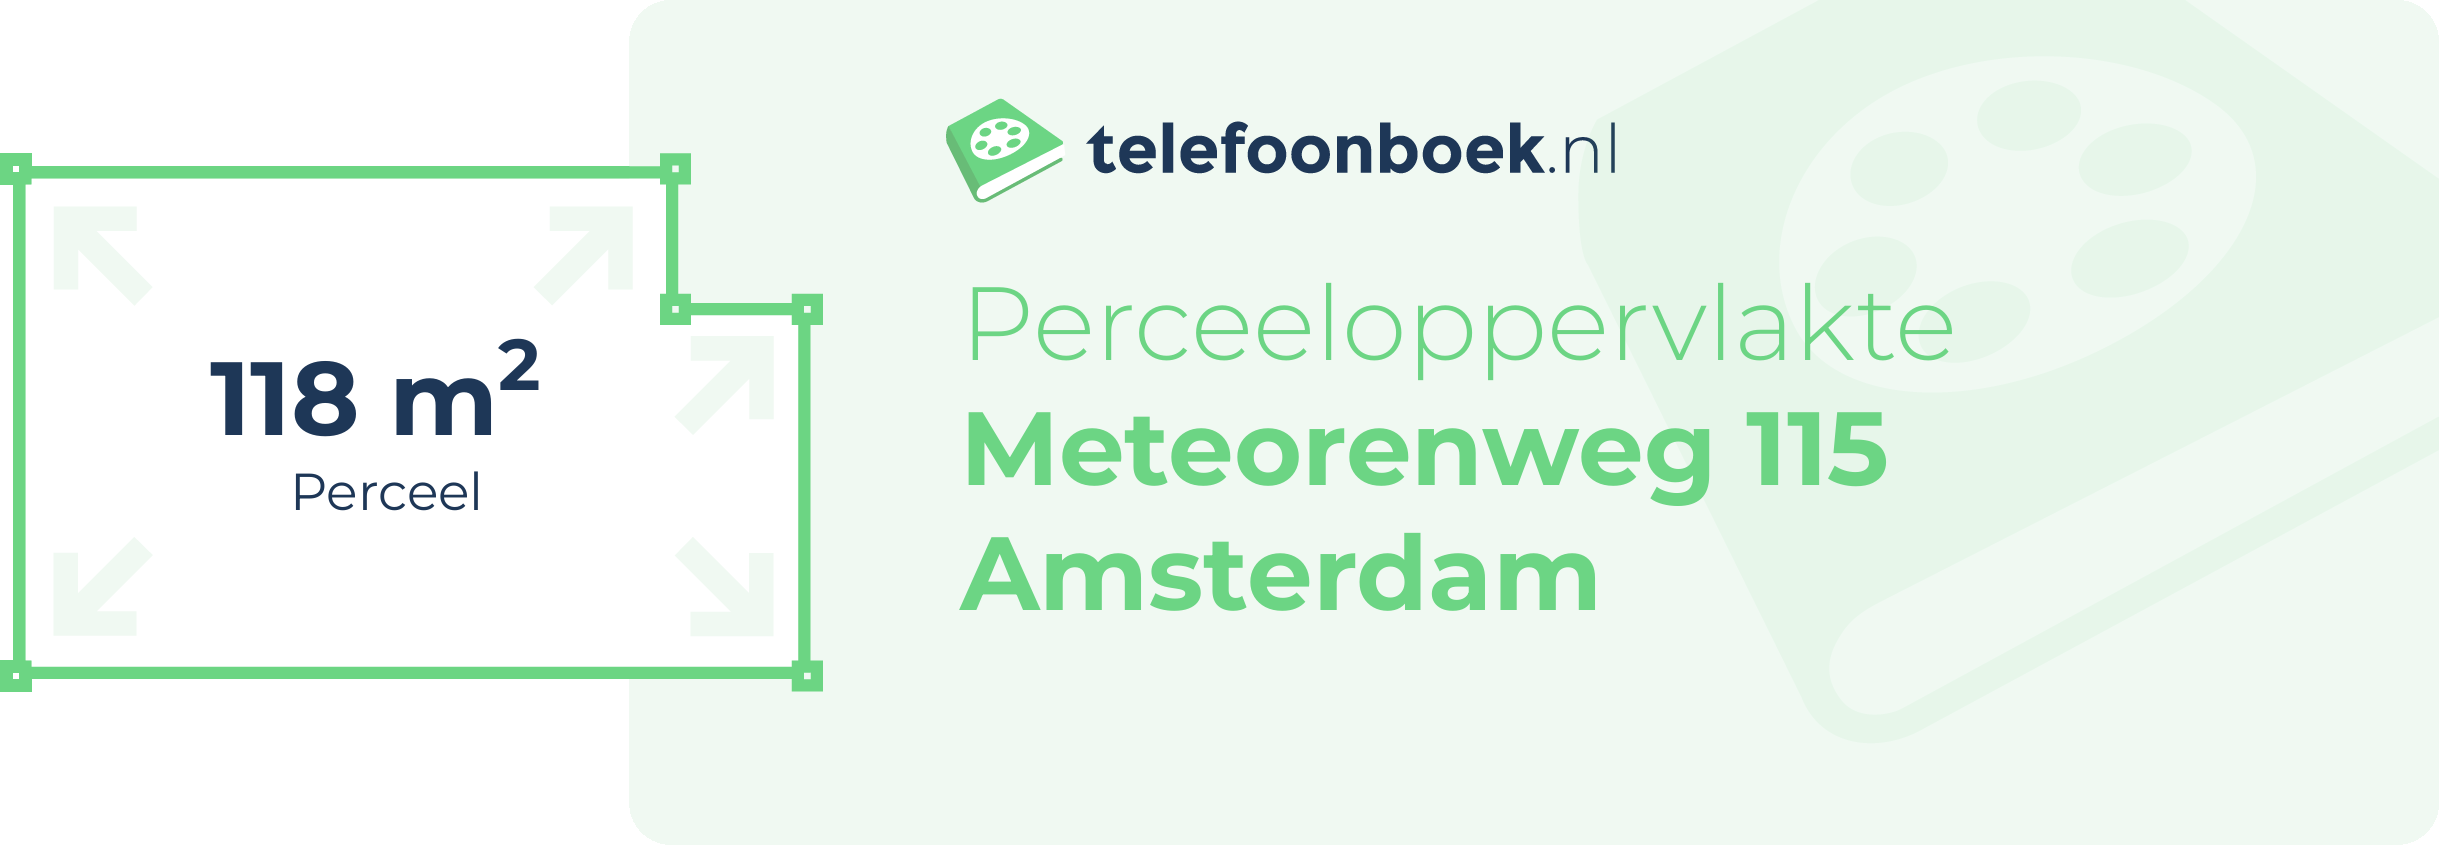 Perceeloppervlakte Meteorenweg 115 Amsterdam